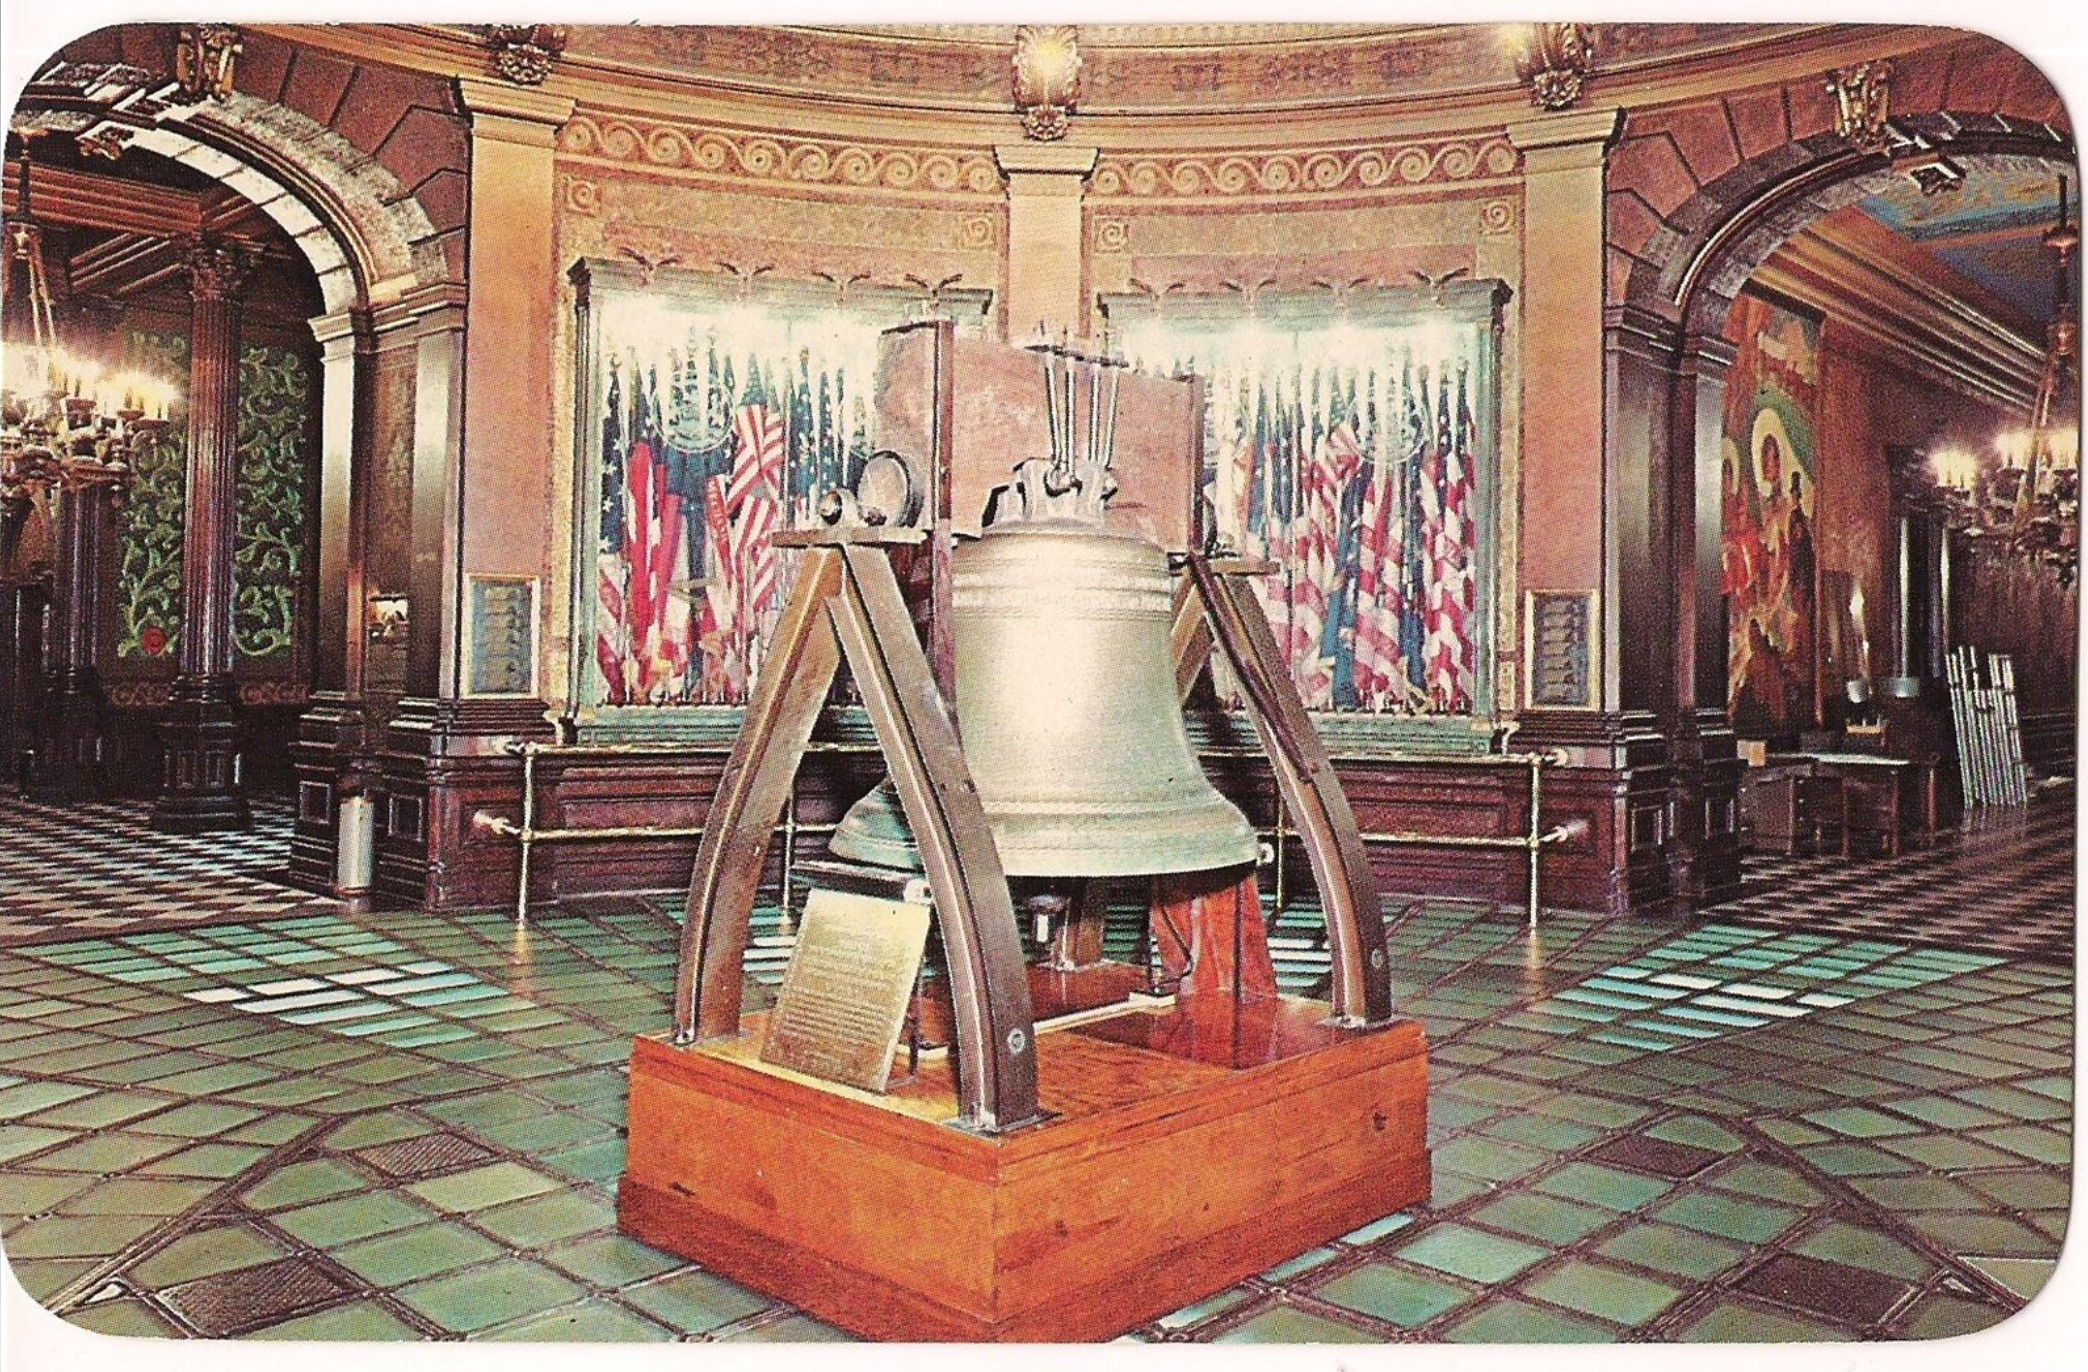 Michigan Liberty Bell replica